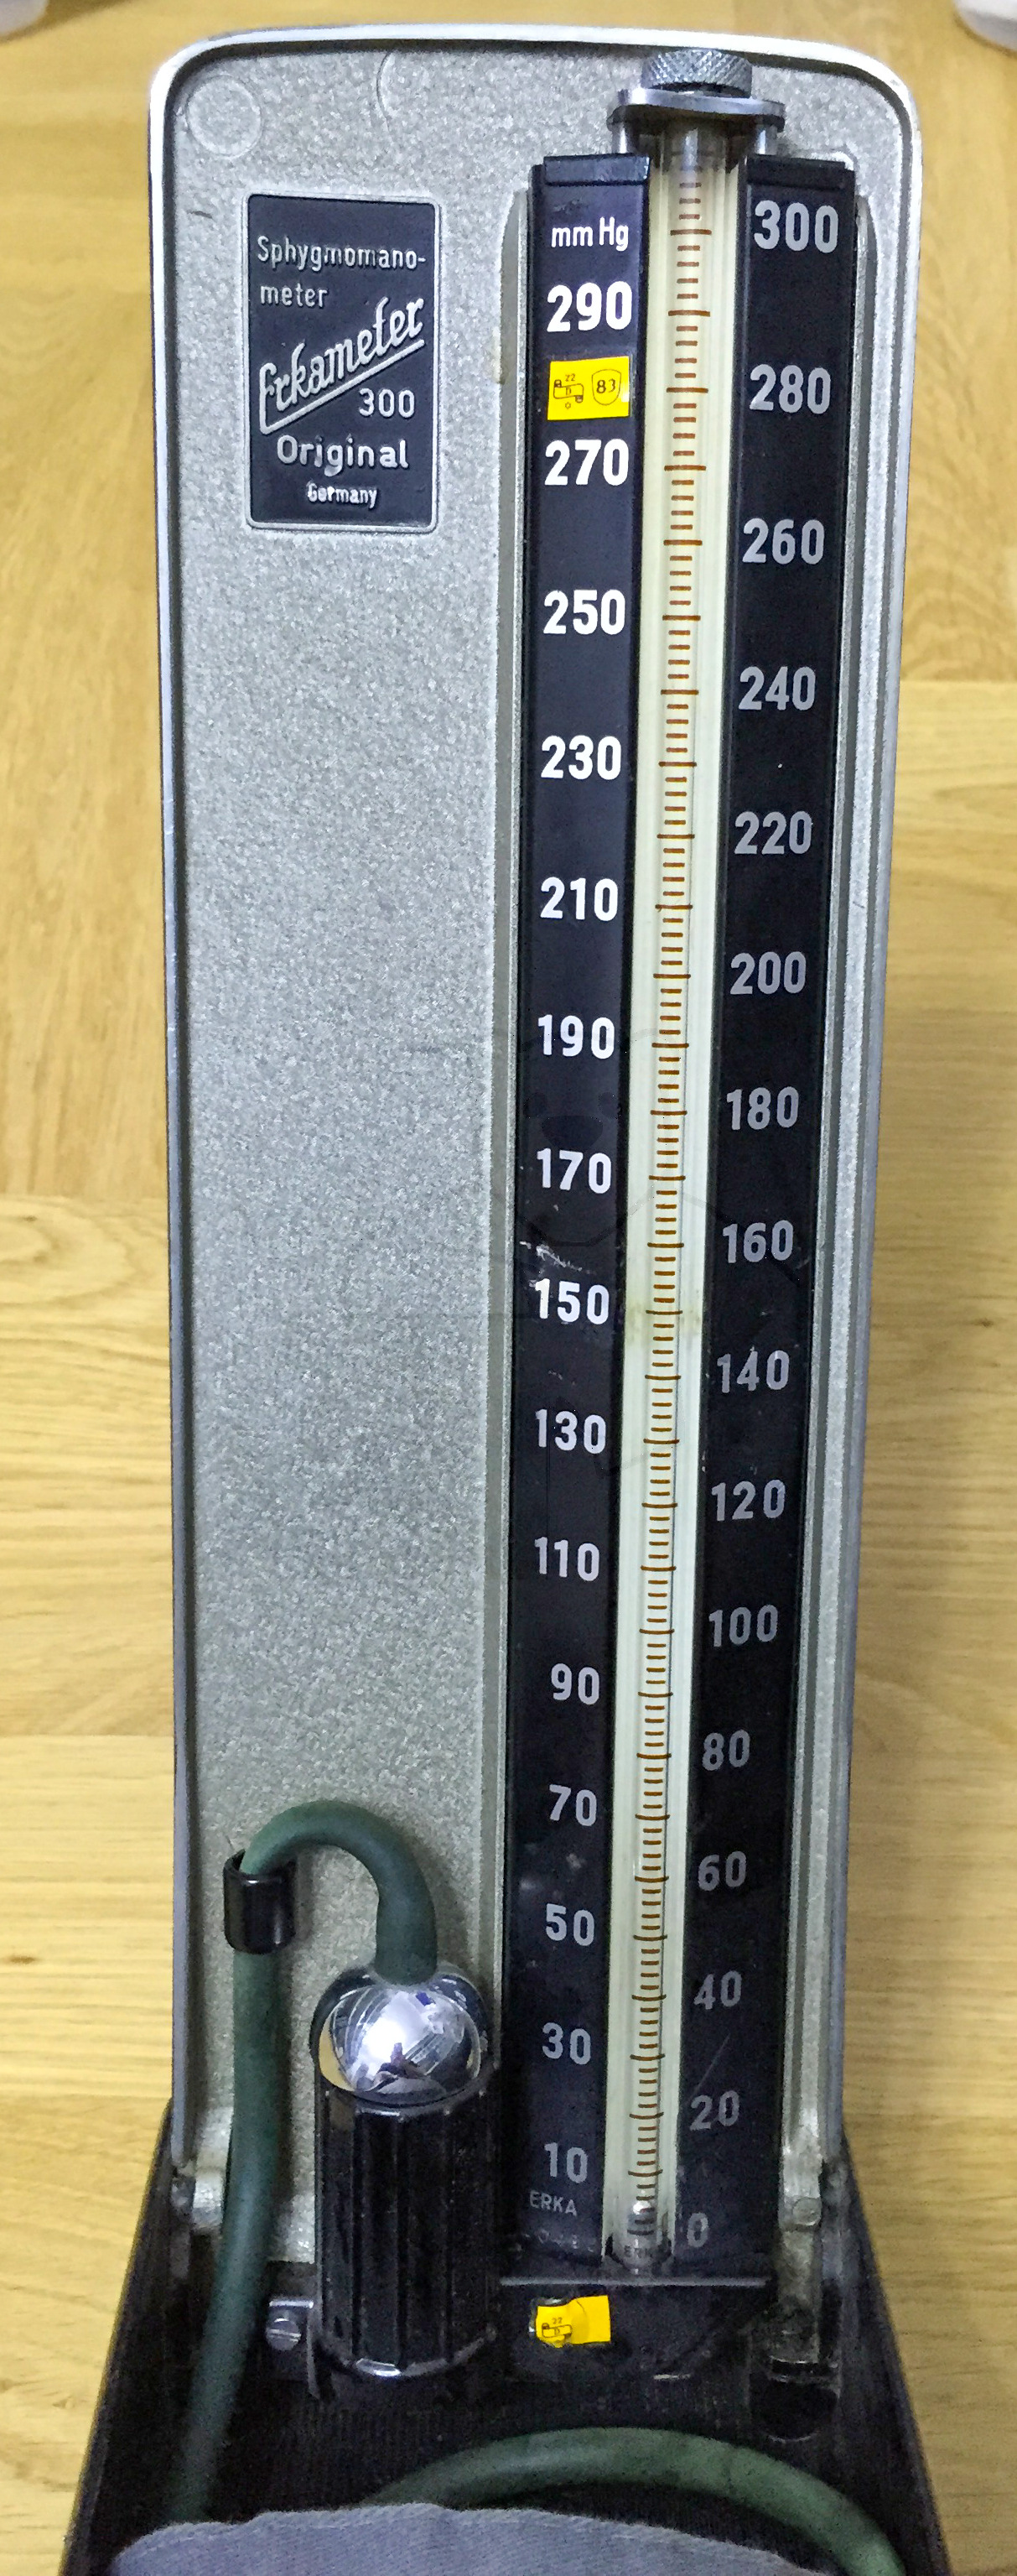 Erka 300 Blutdruckmesser (Sphygmomanometer), Originalzustand, 1960'er Jahre, Skala